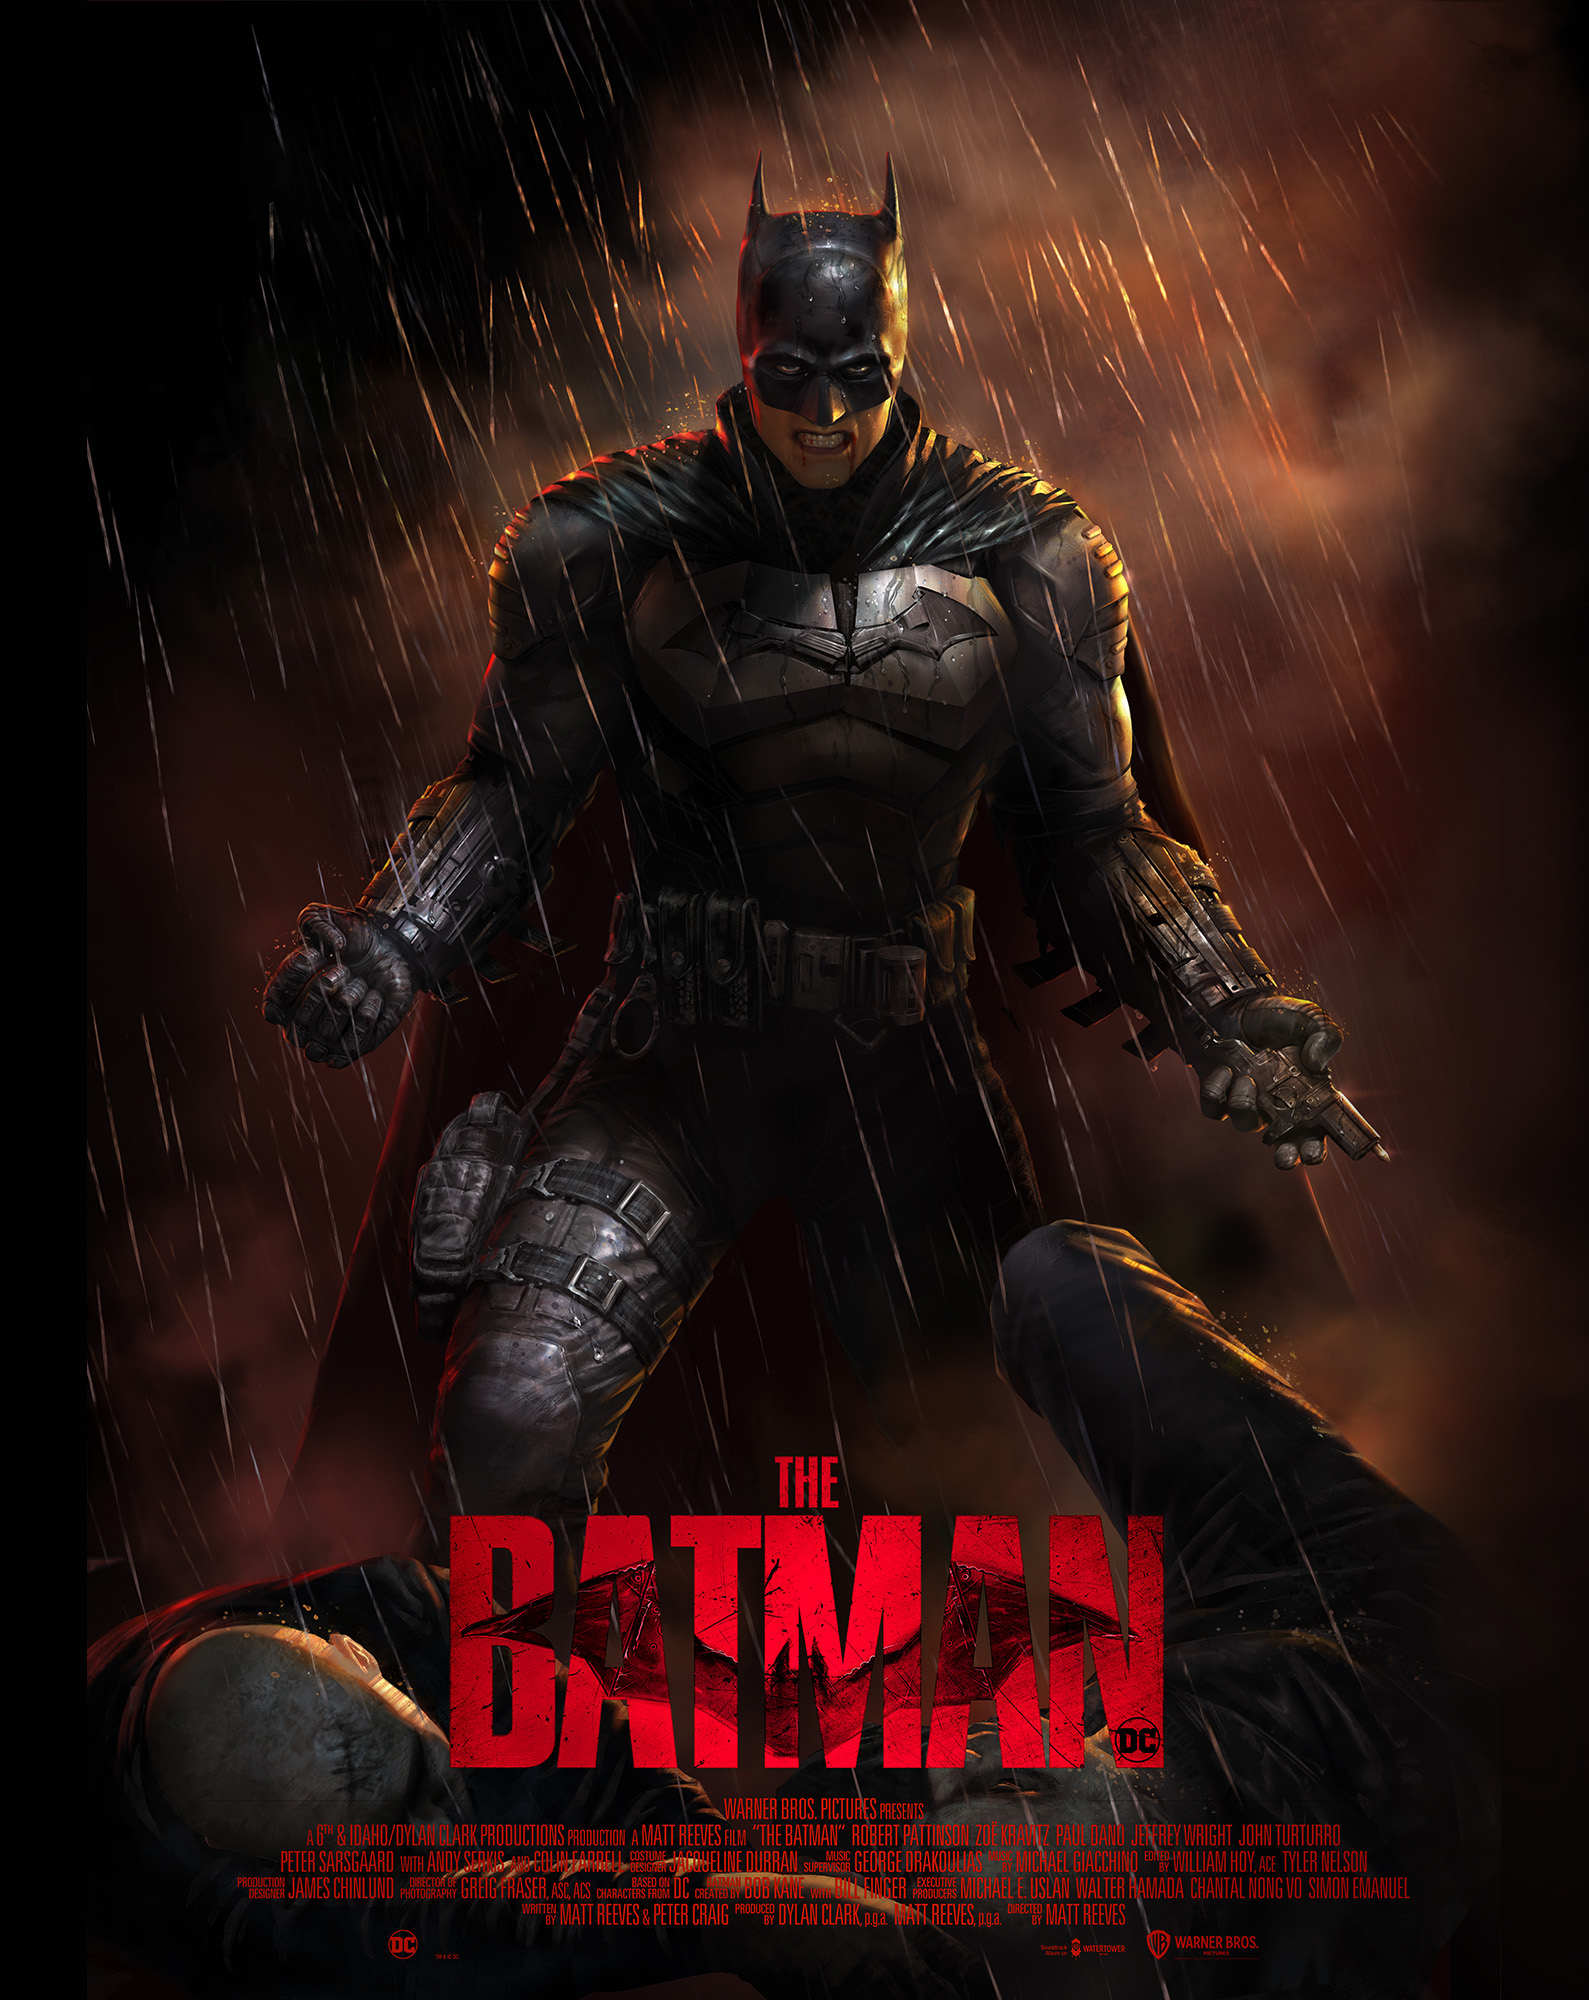 Batman plakat